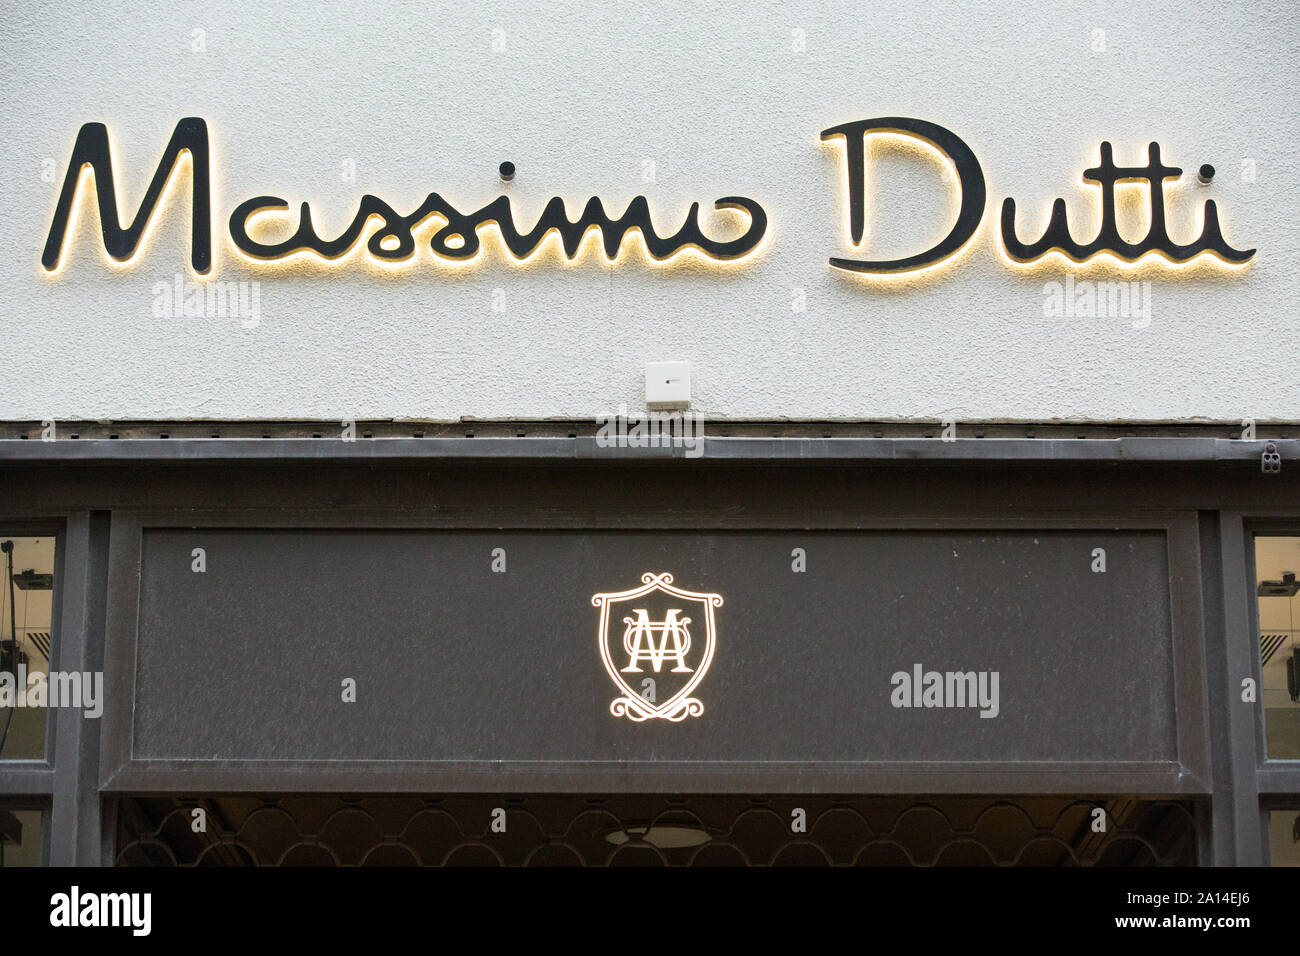 Massimo Dutti logo visto a Göteborg Foto stock - Alamy